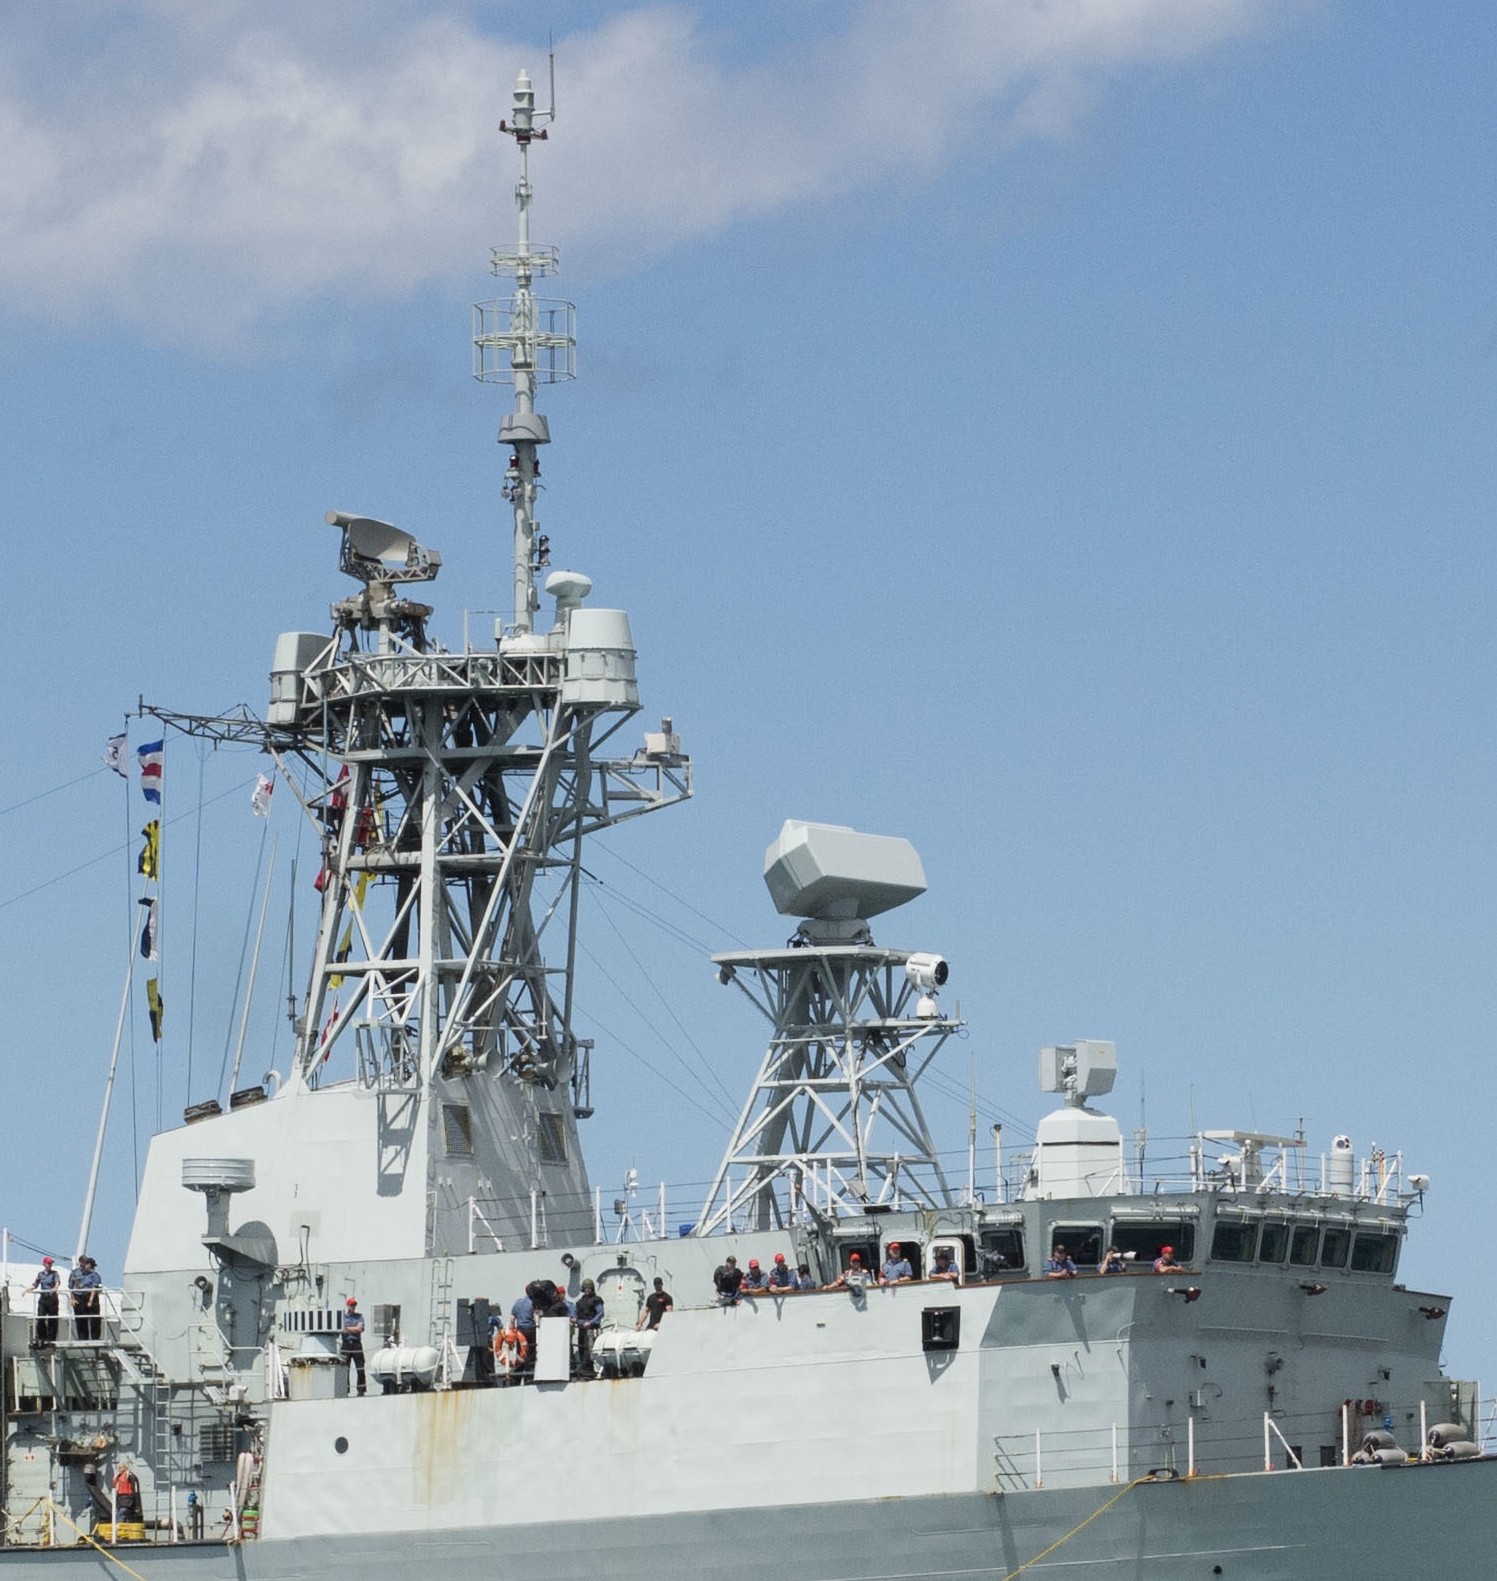 ffh-441 hmcs ottawa halifax class helicopter patrol frigate ncsm royal canadian navy 13a thales smart-s radar sea giraffe saab